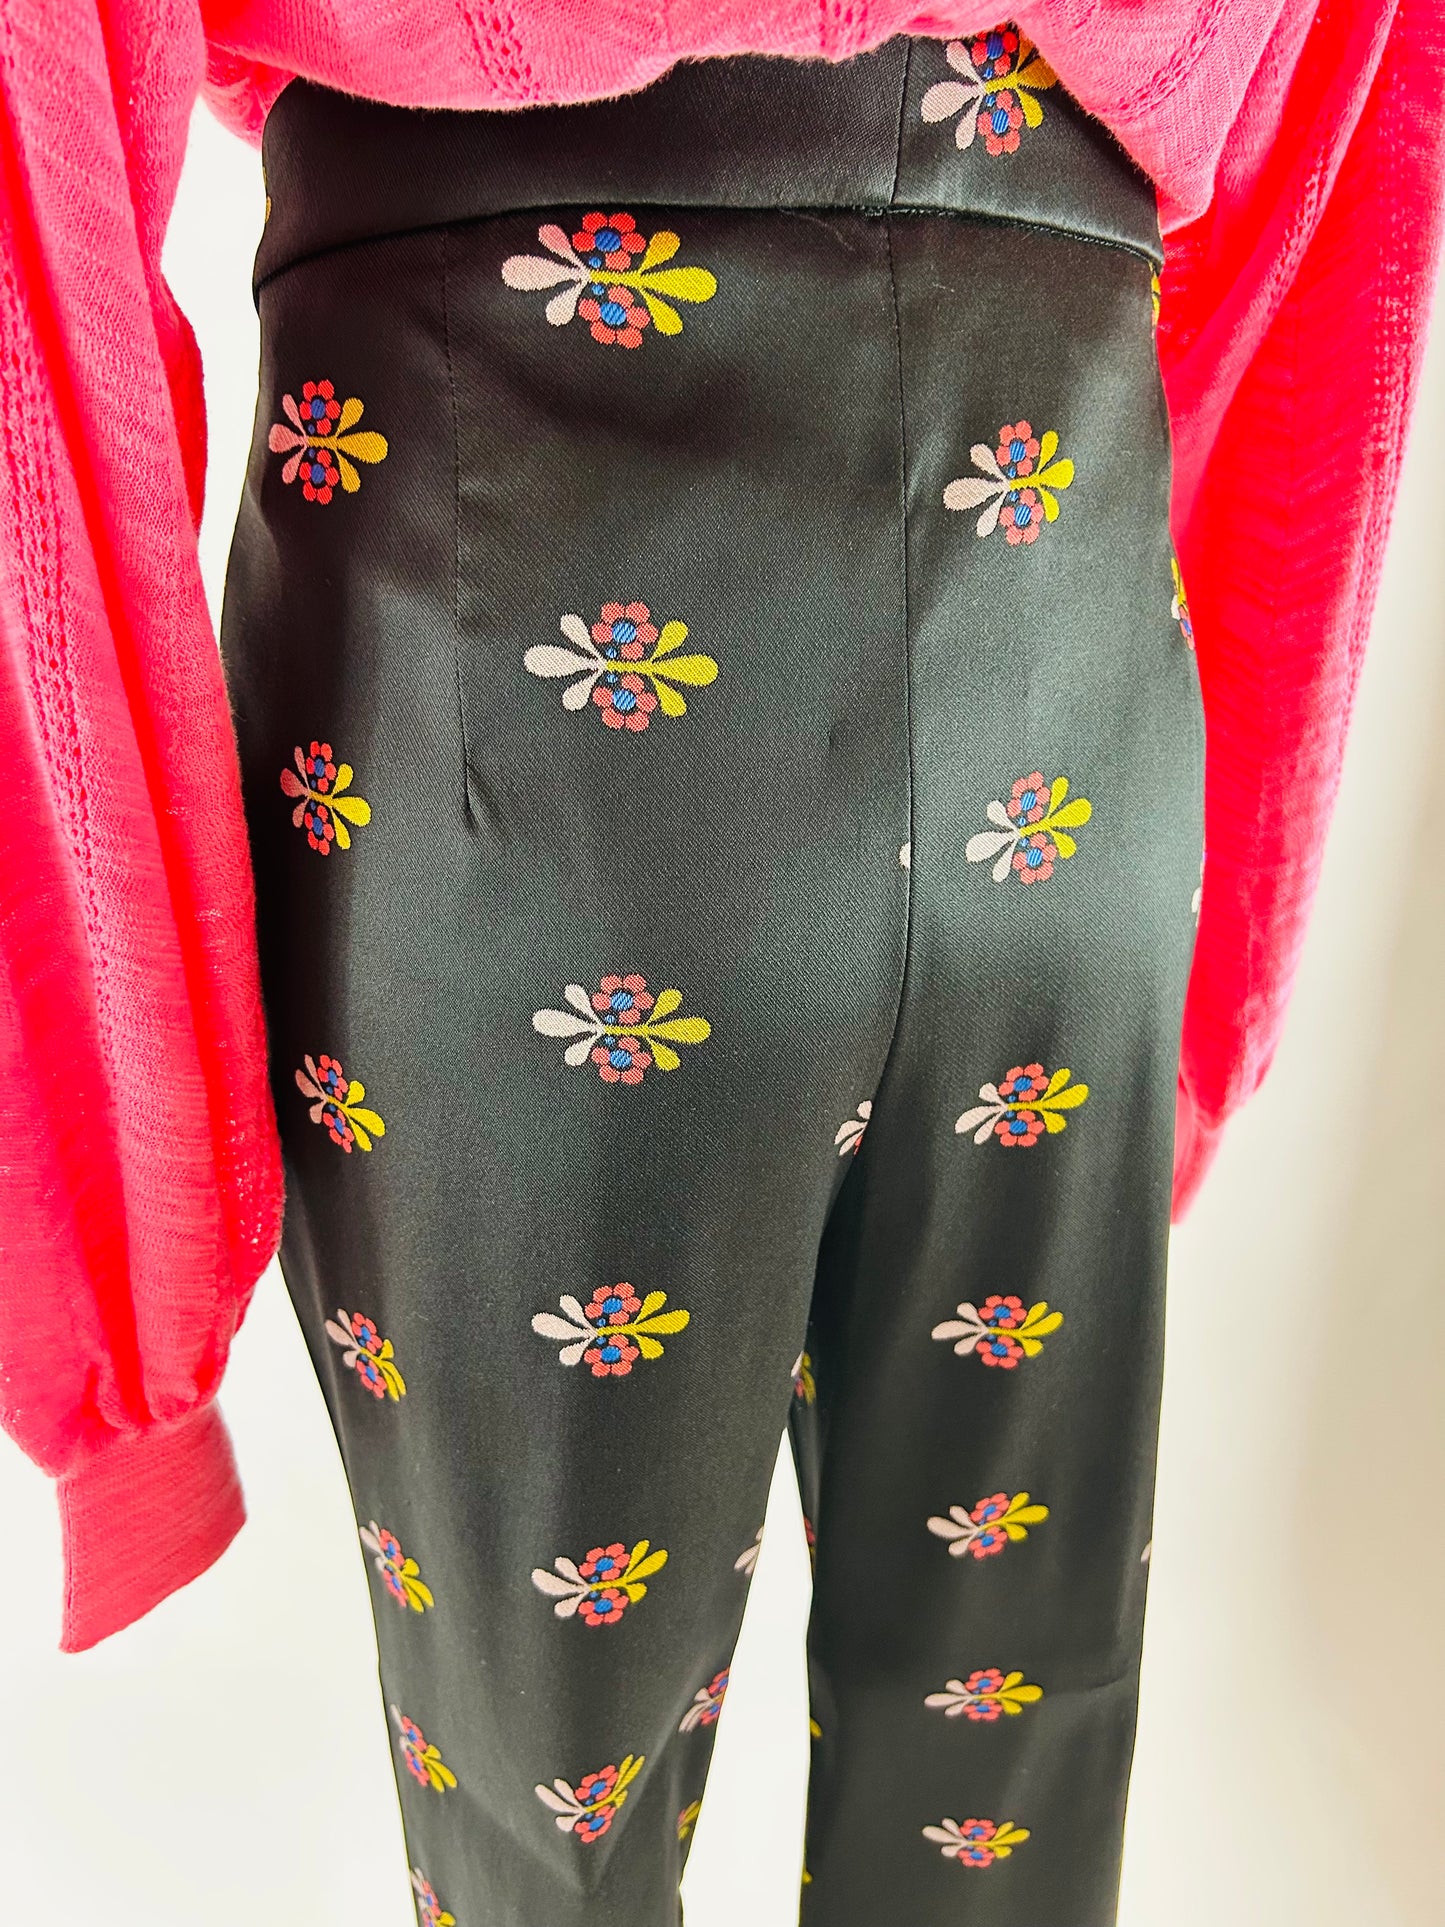 Cynthia Rowley Black pants with Floral Print